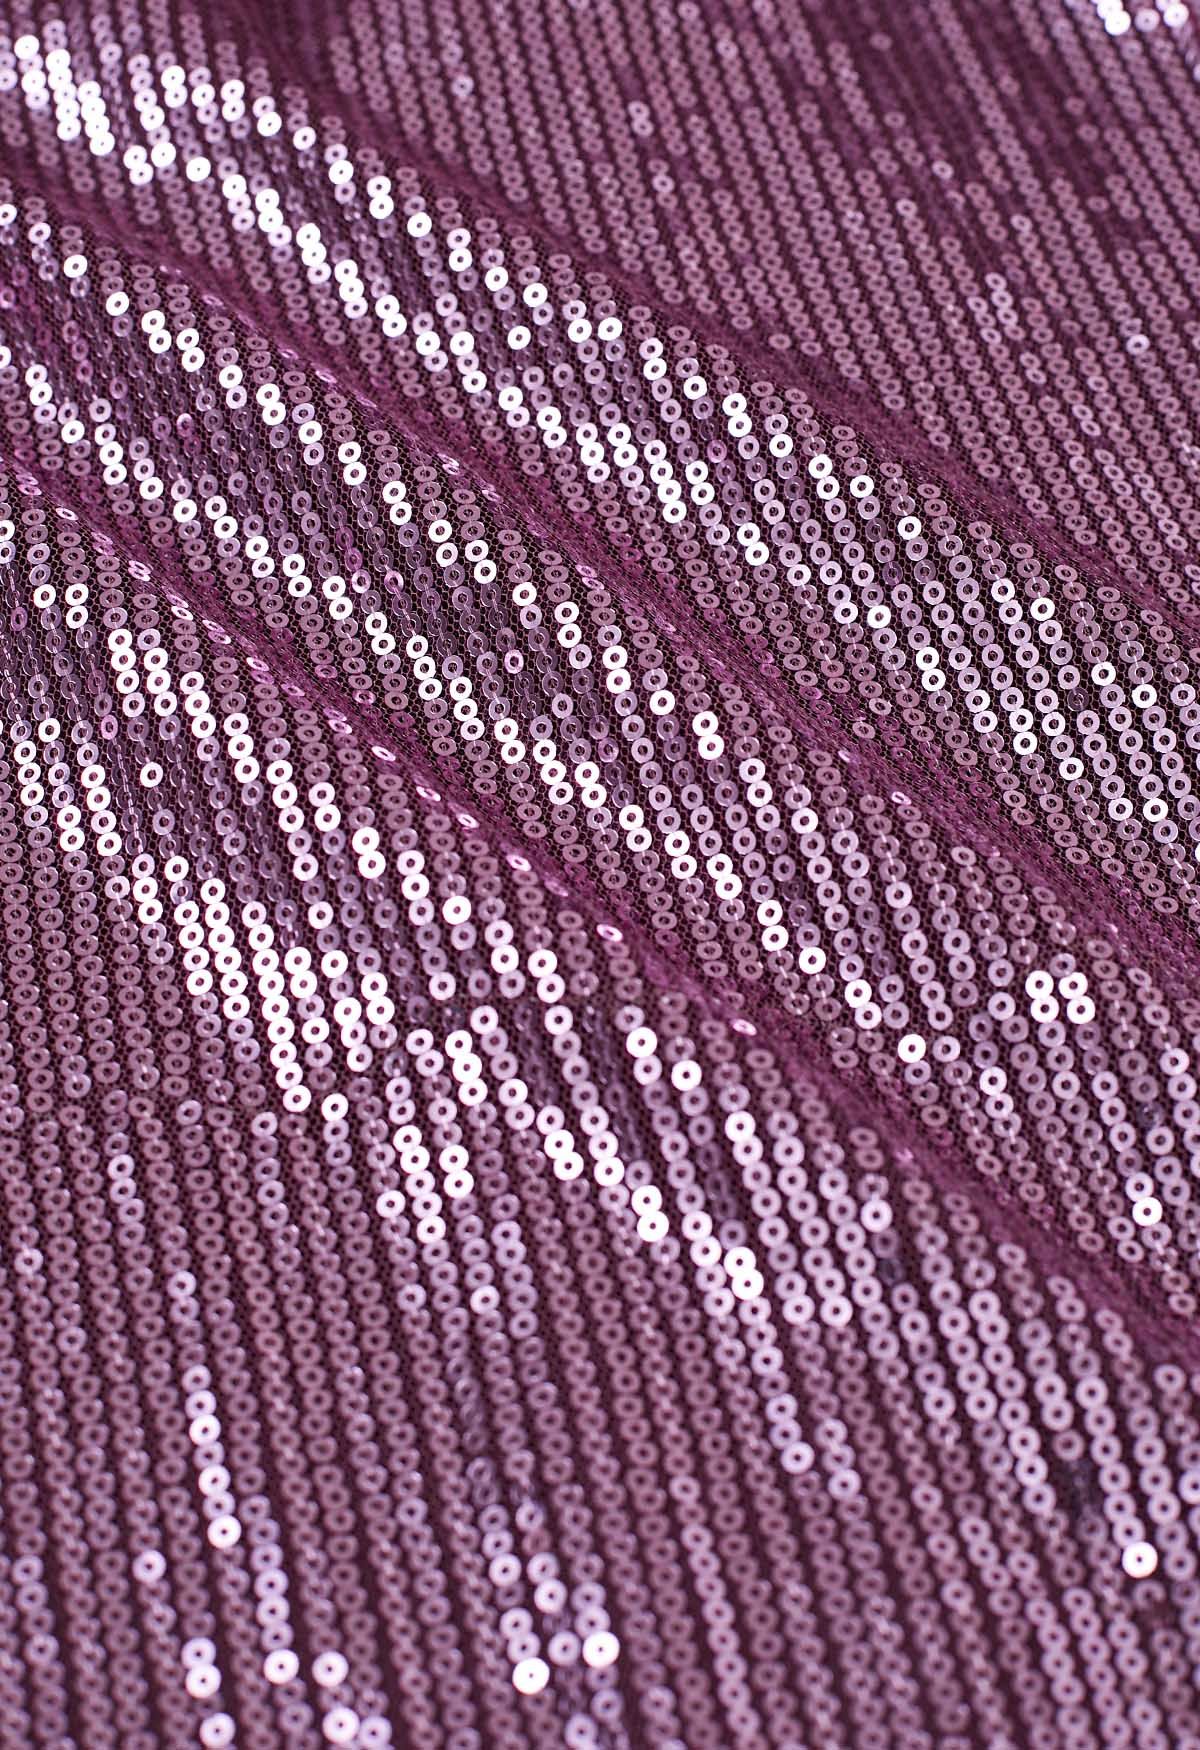 Ravishing Sequins Mesh Tulle Midi Skirt in Purple